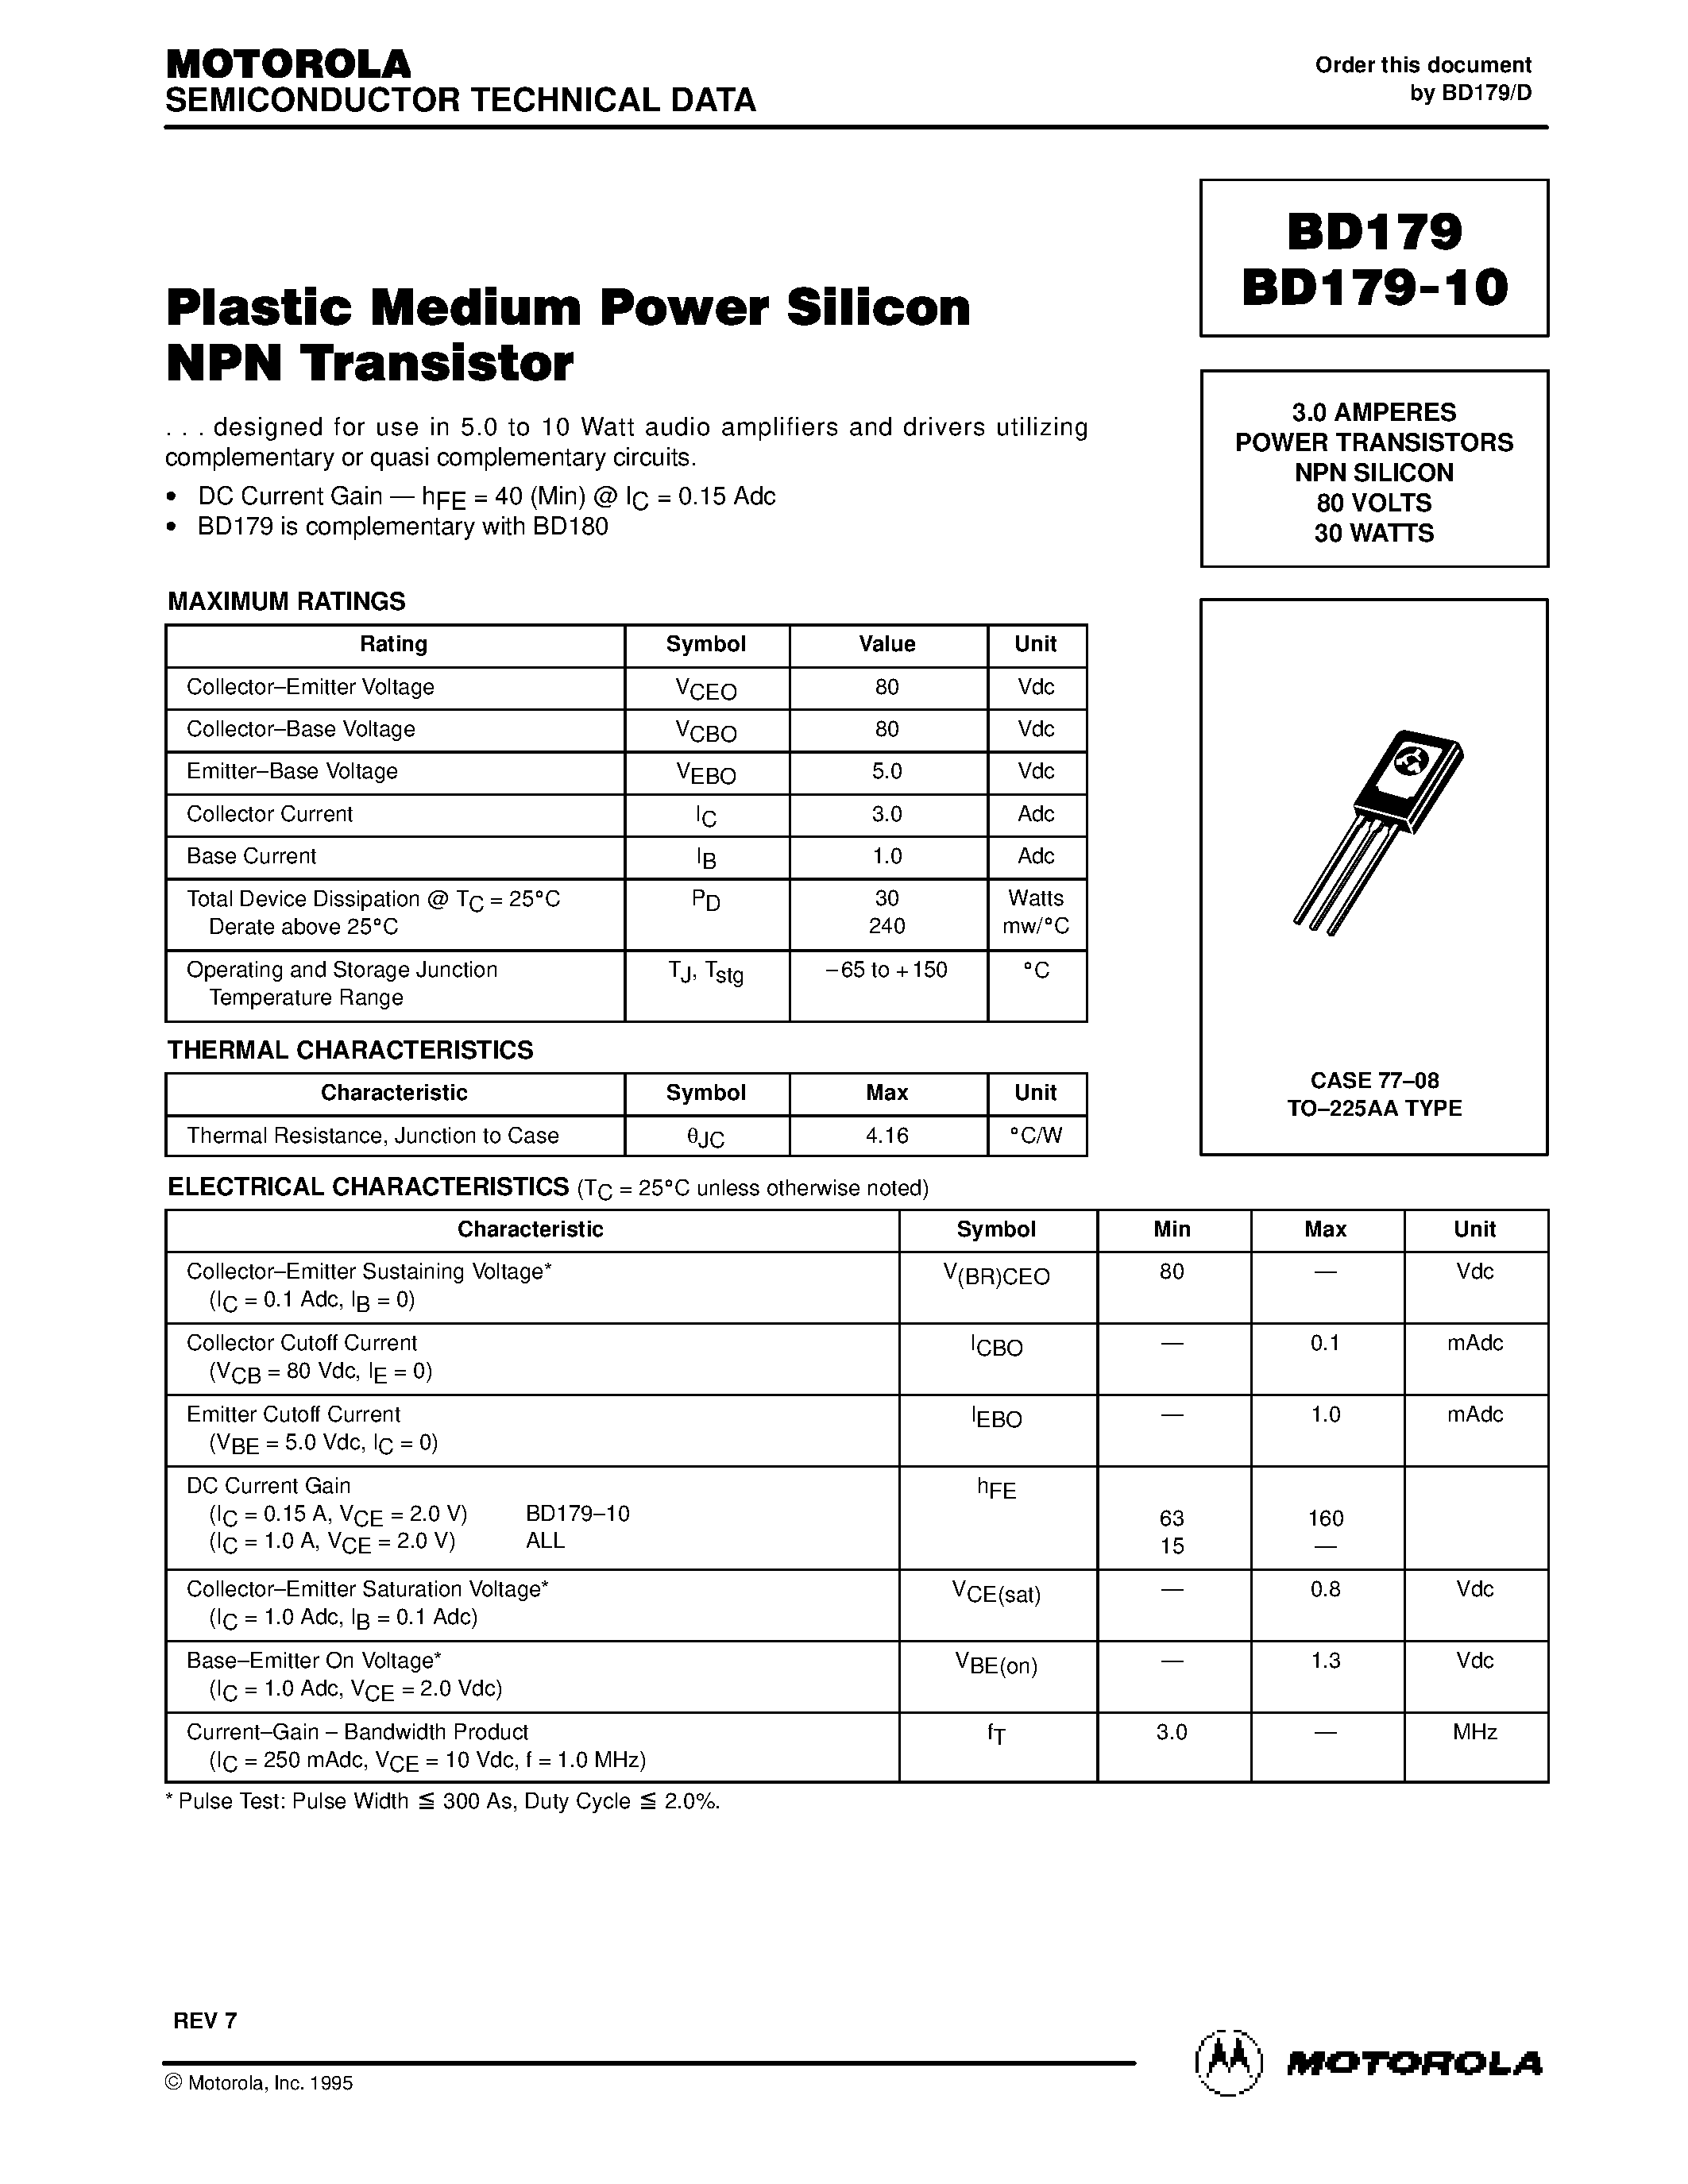 Datasheet BD179-10 - Plastic Medium Power Silicon NPNP Transistor page 1